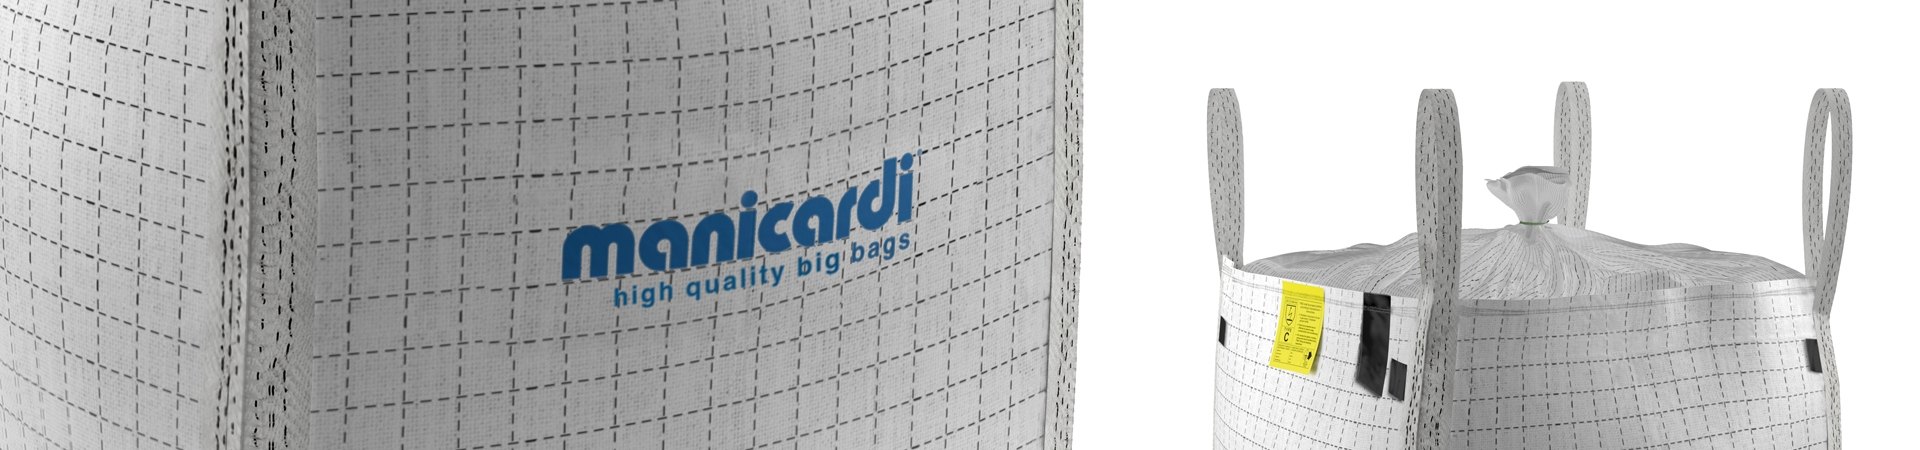 manicardi - hight quality big bags Angebot anfordern